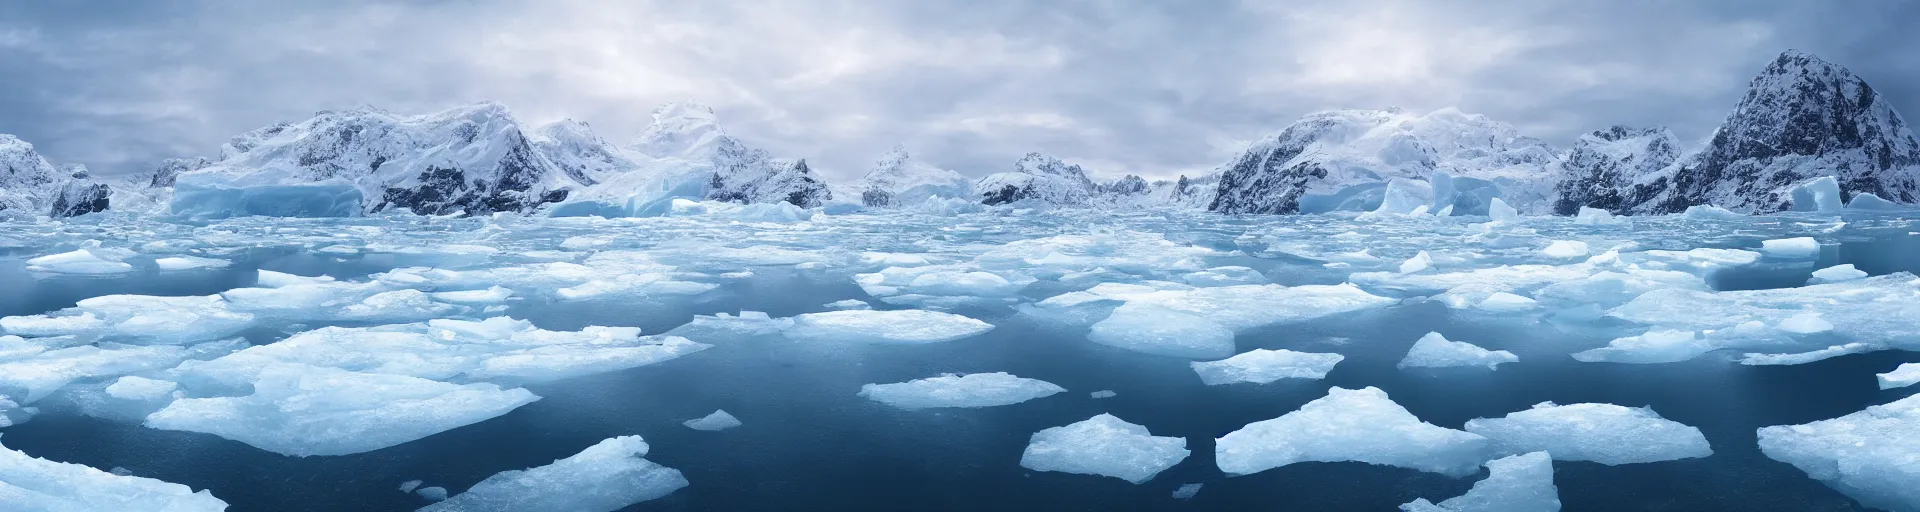 Prompt: arctic, snowy landscape, ocean, icebergs, wallpaper, digital art